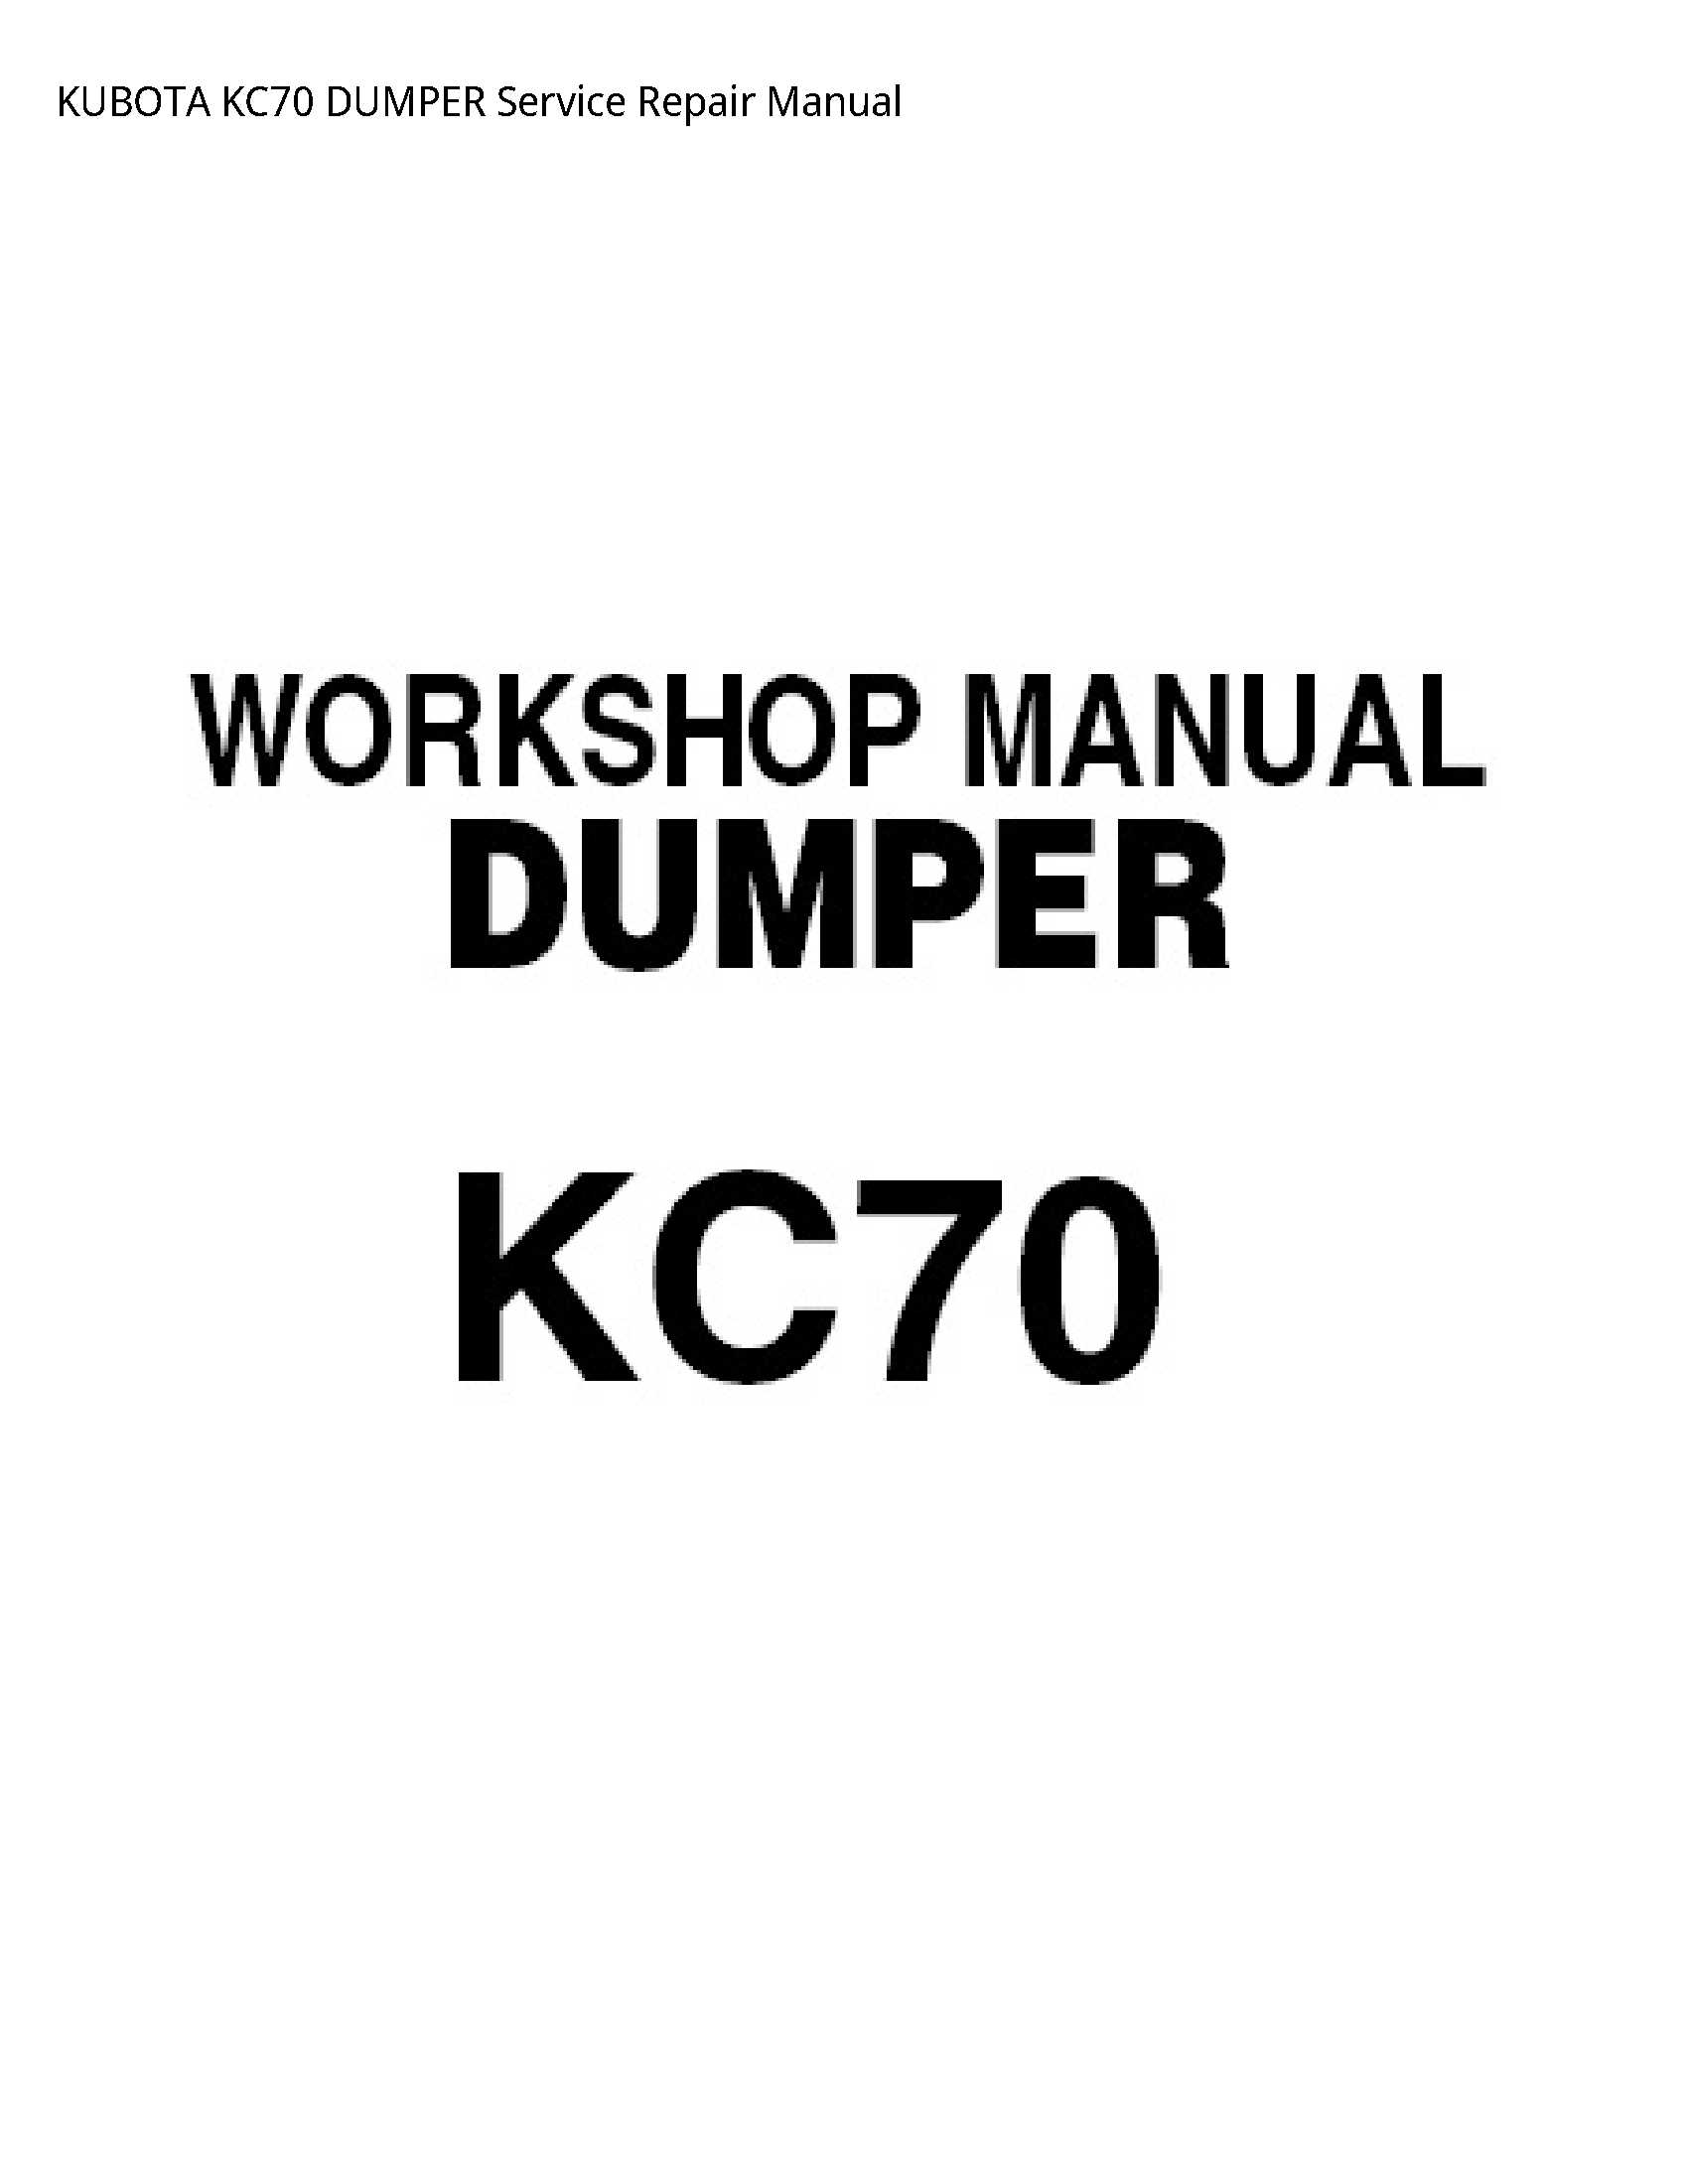 Kubota KC70 DUMPER manual